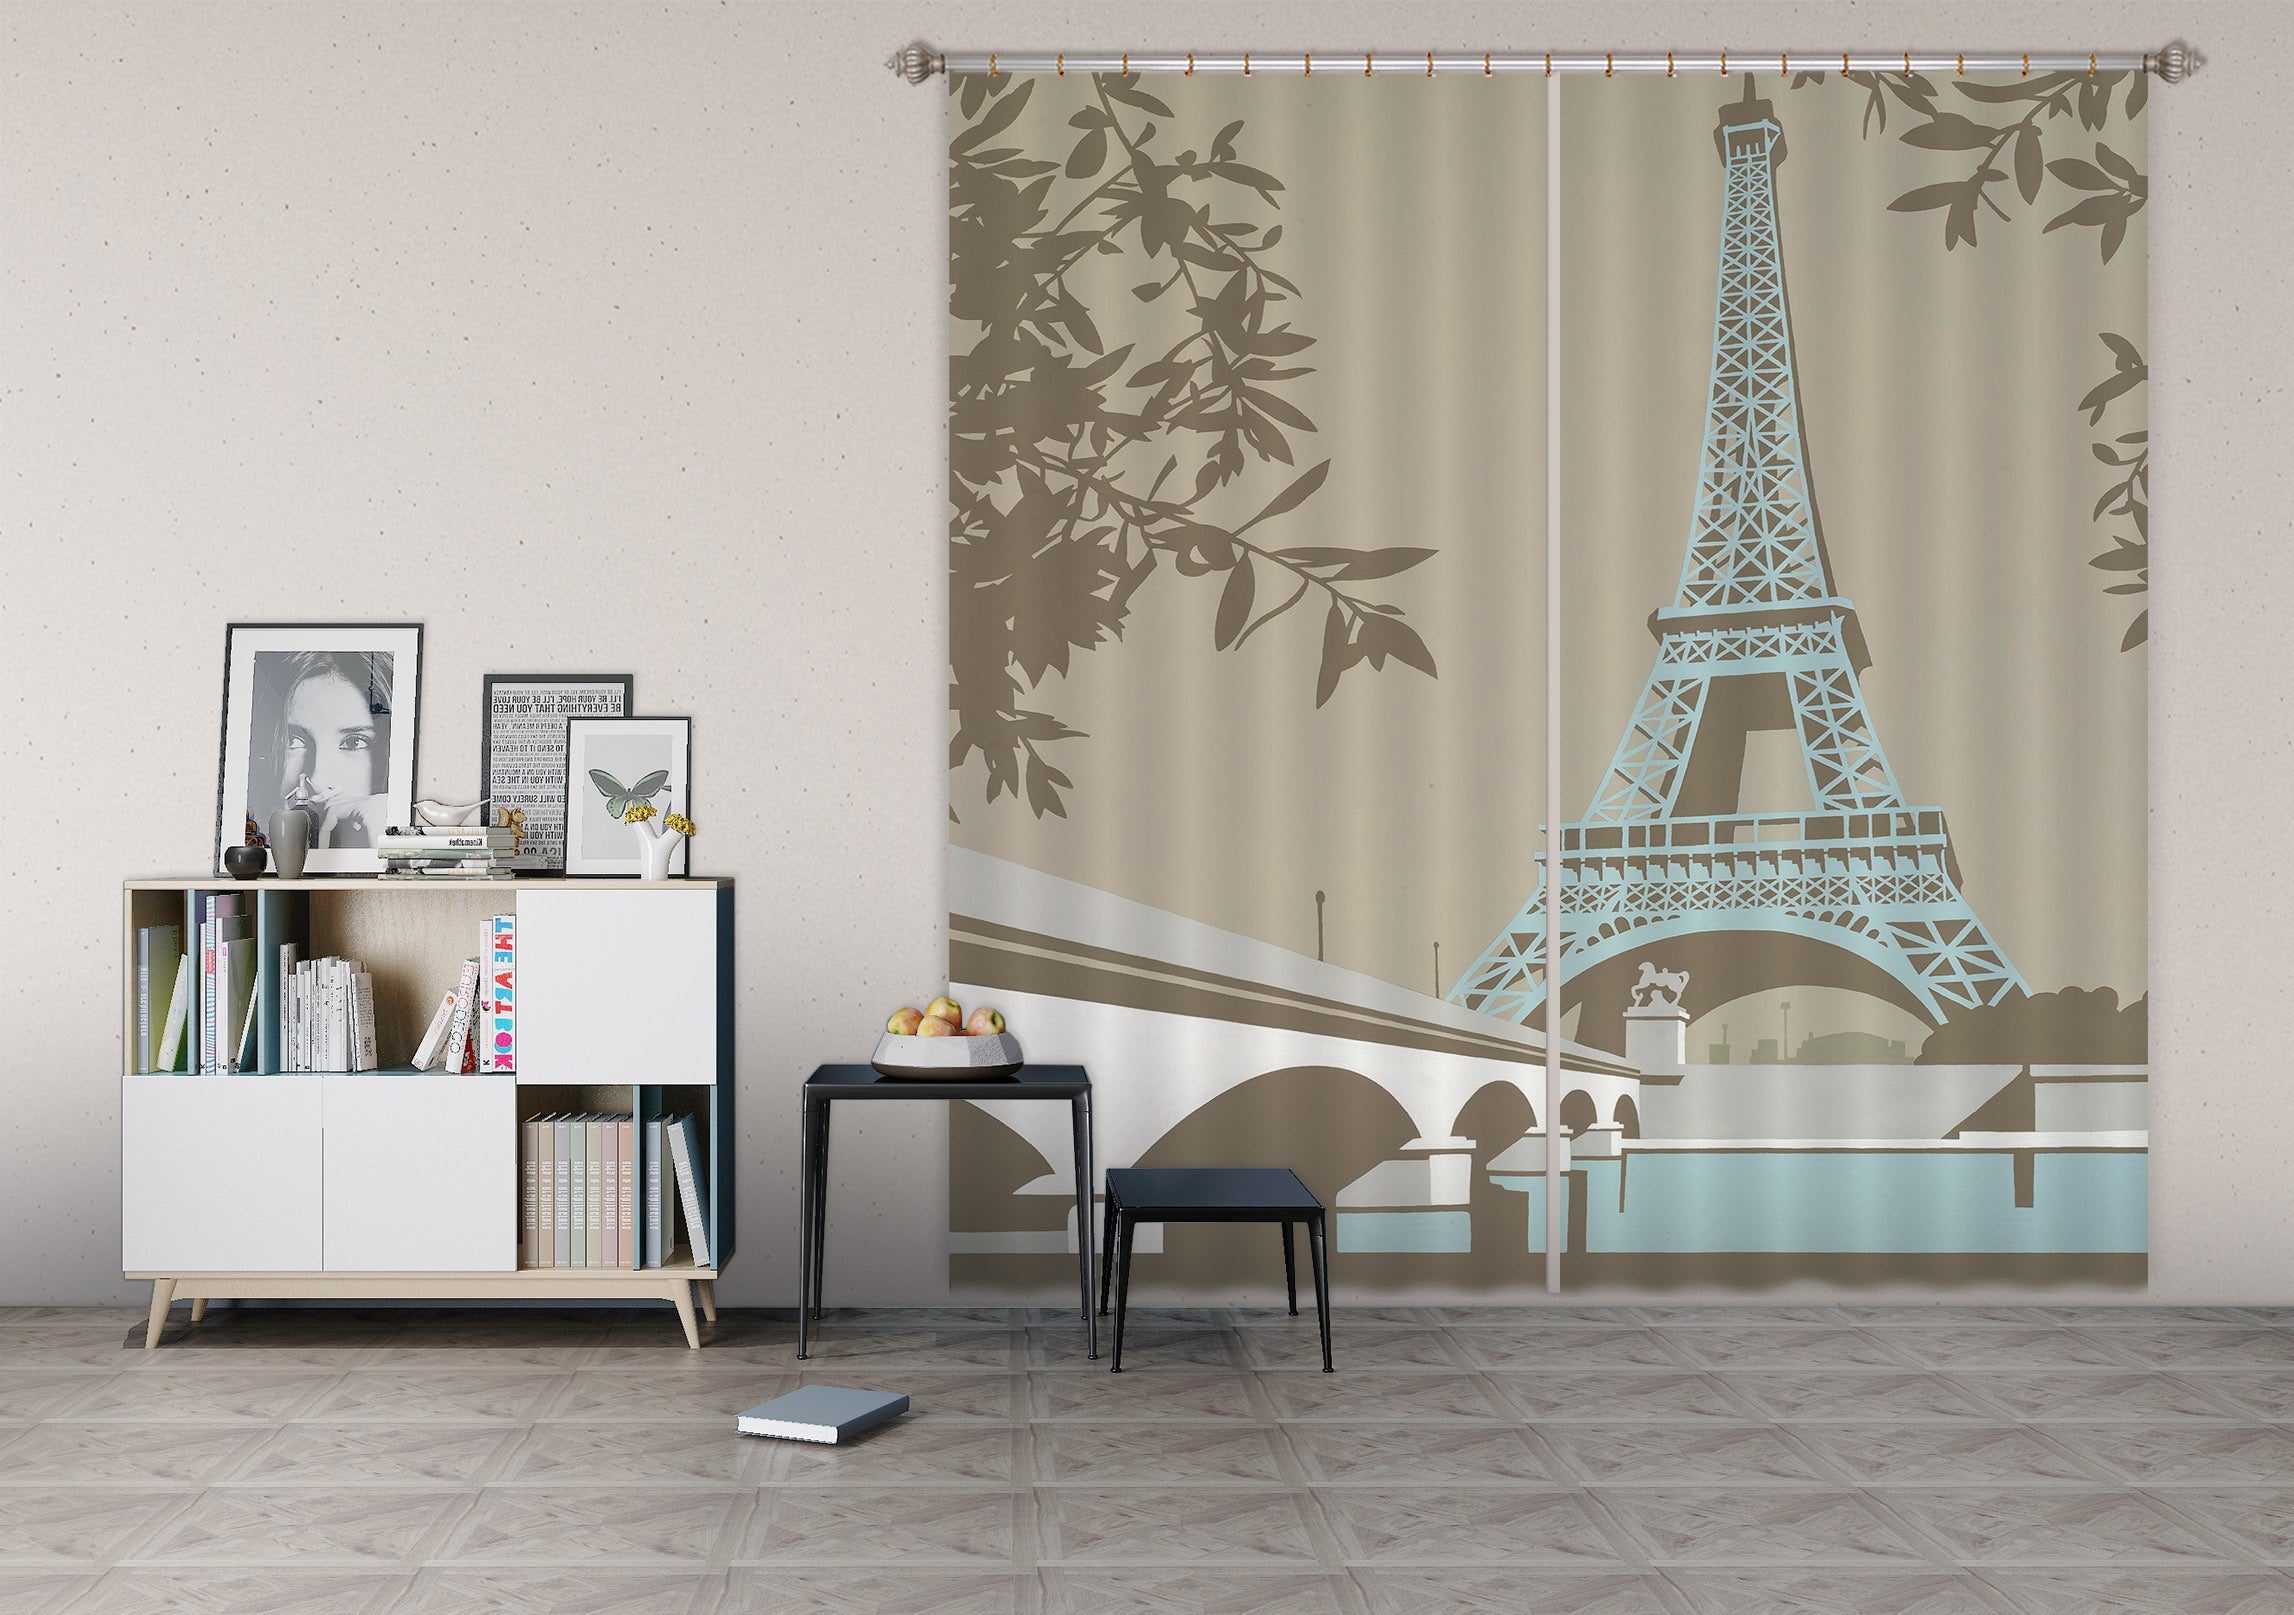 3D Paris 127 Steve Read Curtain Curtains Drapes